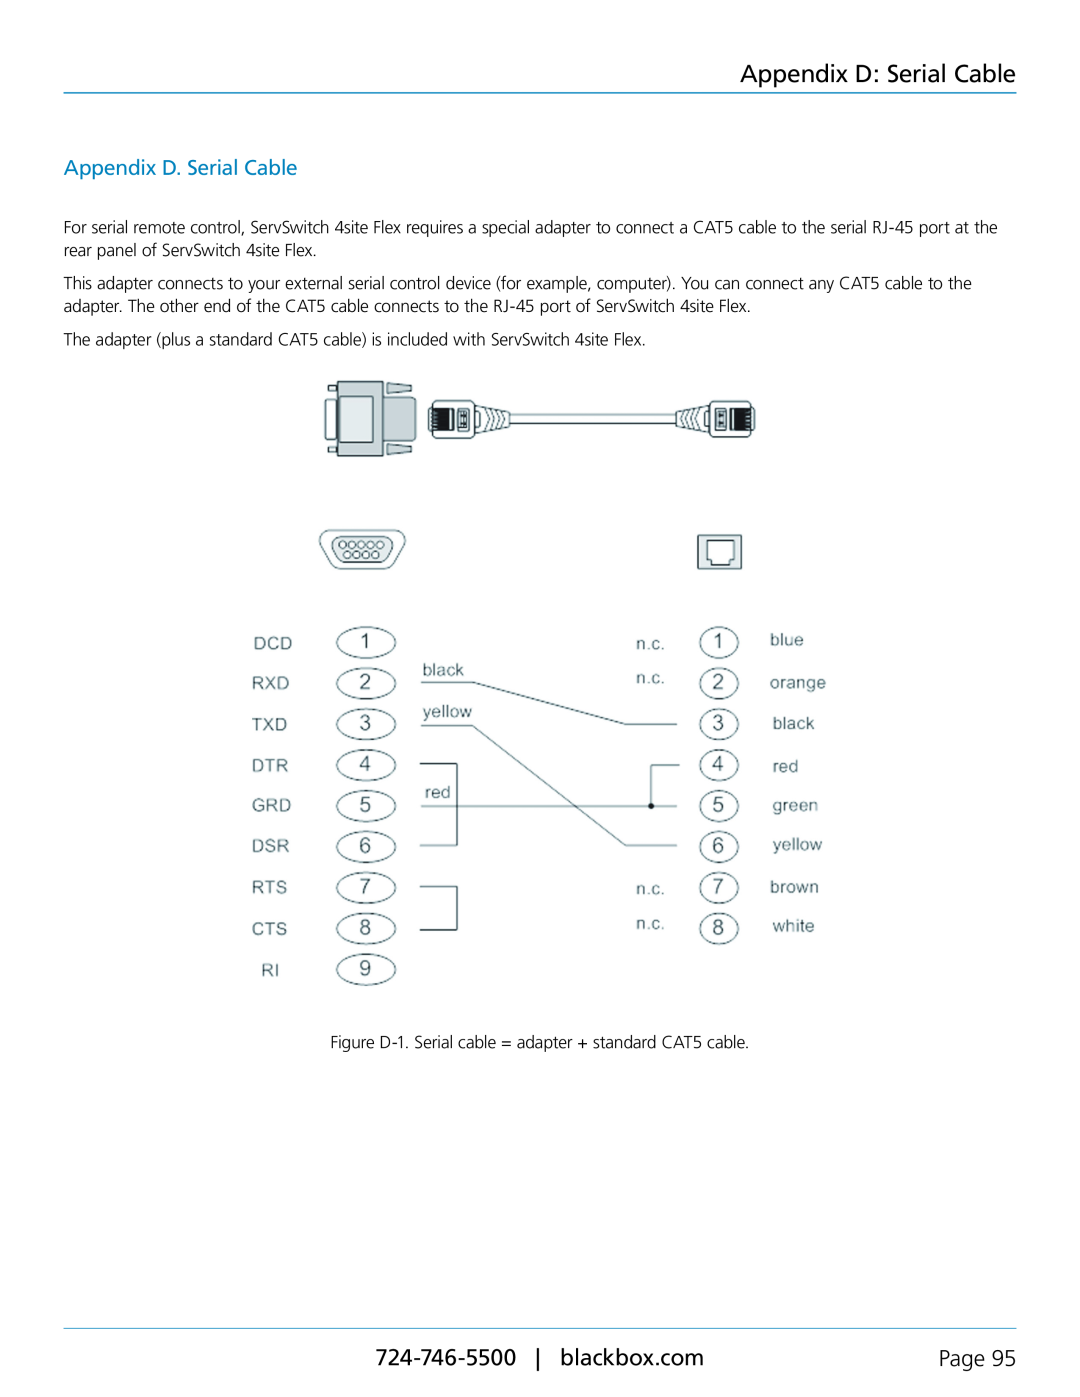 Black Box servswitch 4site flex, KVP40004A manual Appendix D Serial Cable, Appendix D. Serial Cable, Page 